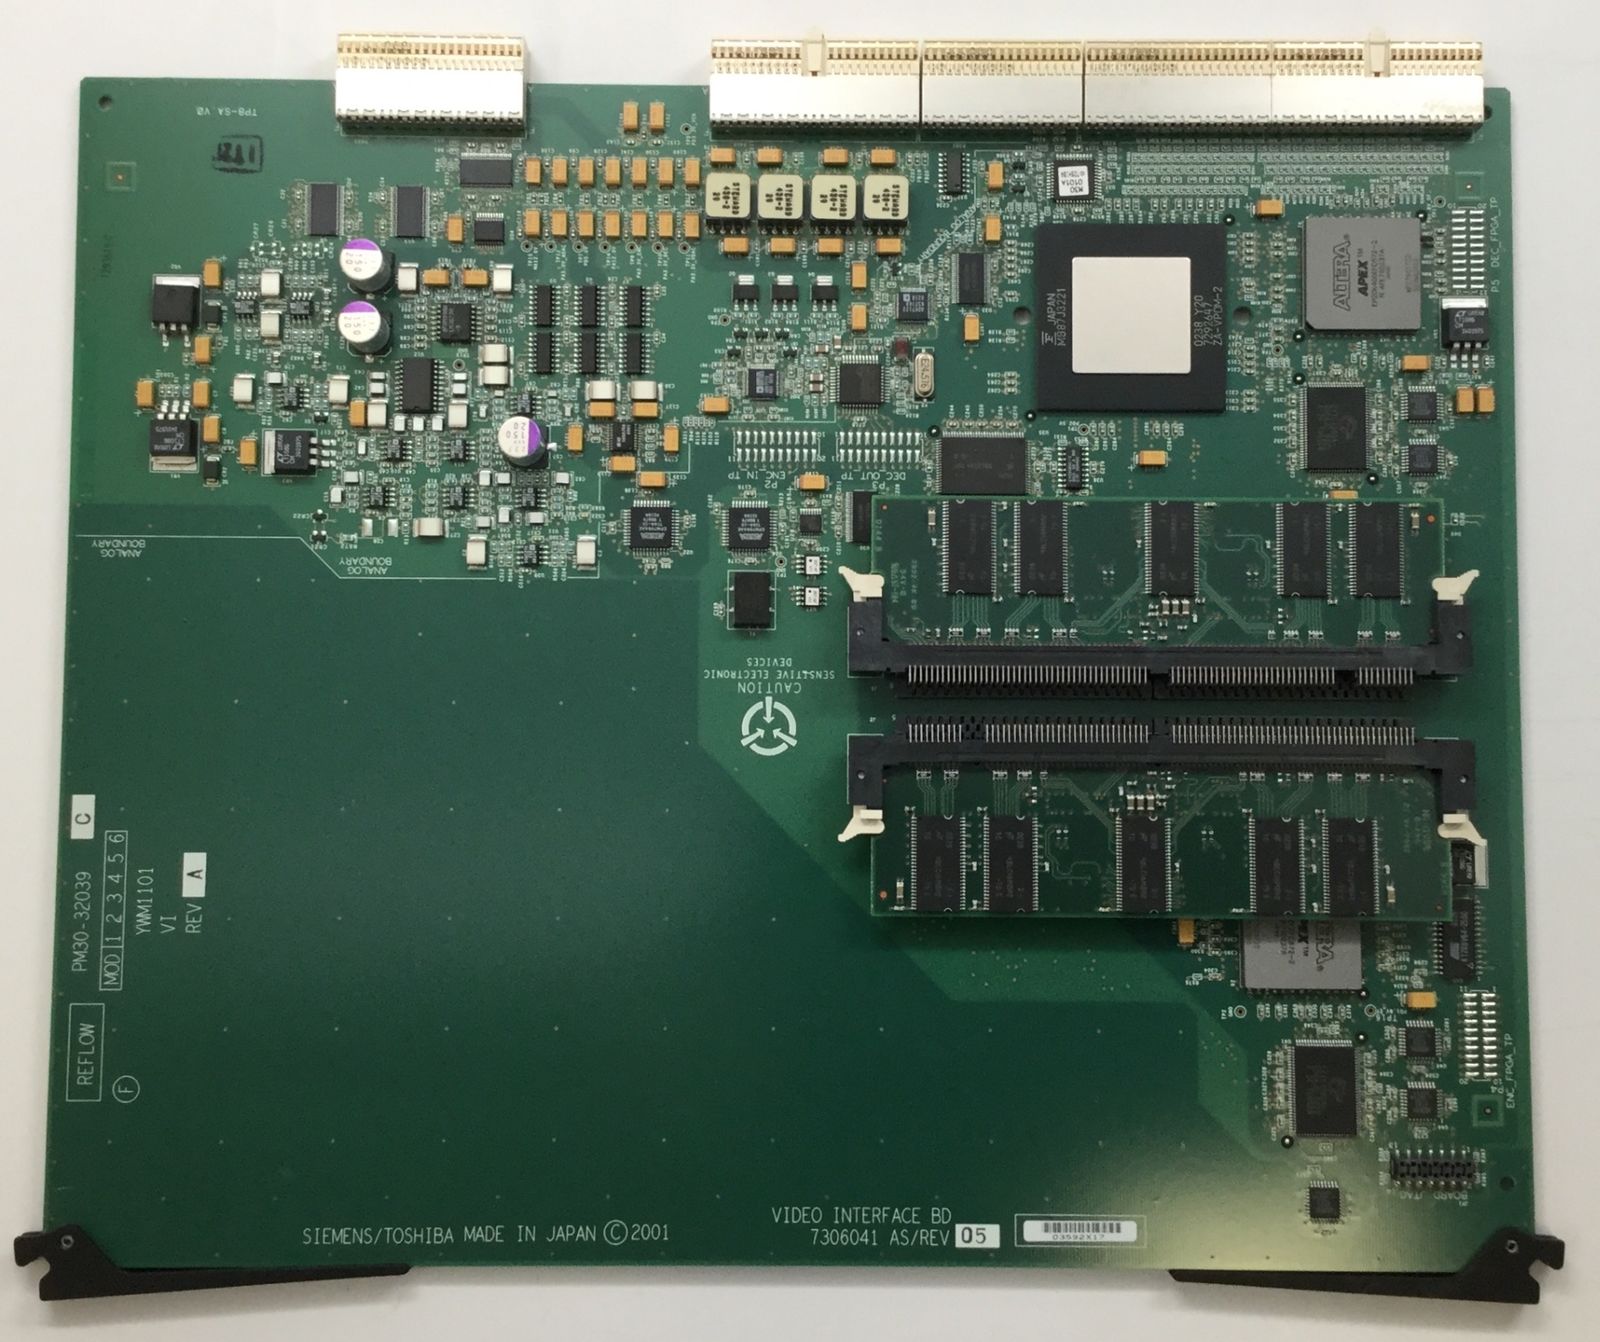 Siemens Sonoline Antares Ultrasound 7306041 Video Interface Board DIAGNOSTIC ULTRASOUND MACHINES FOR SALE